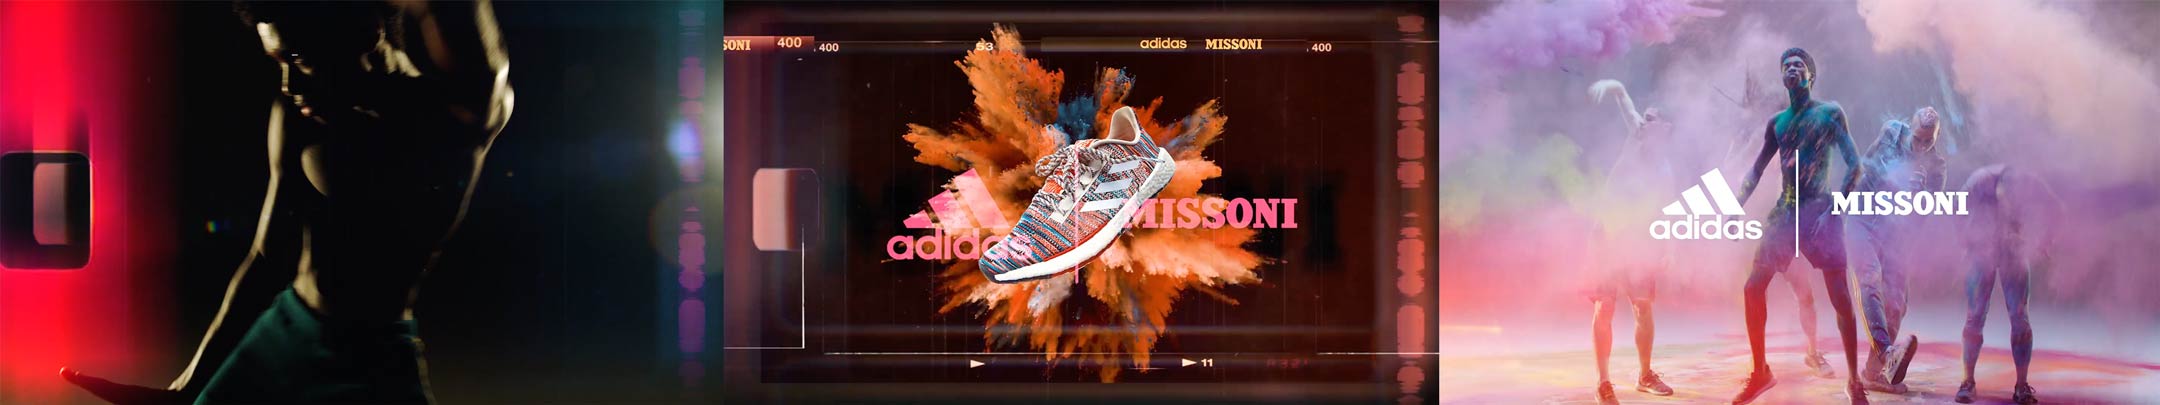 Adidas x Missoni – Vol. 2